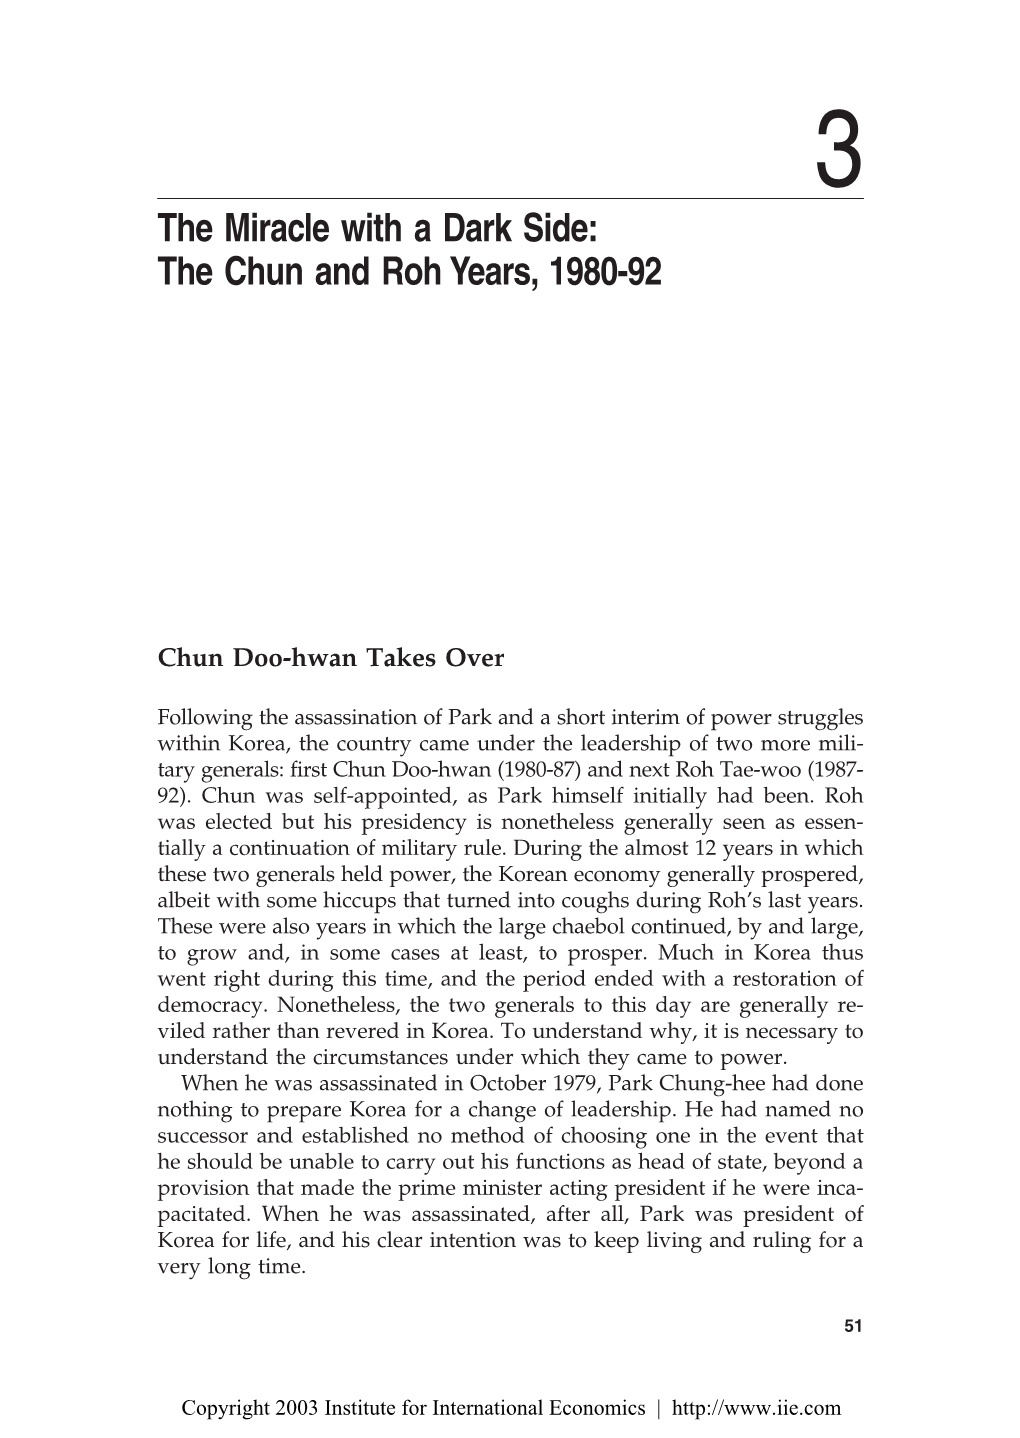 The Chun and Roh Years, 1980-92